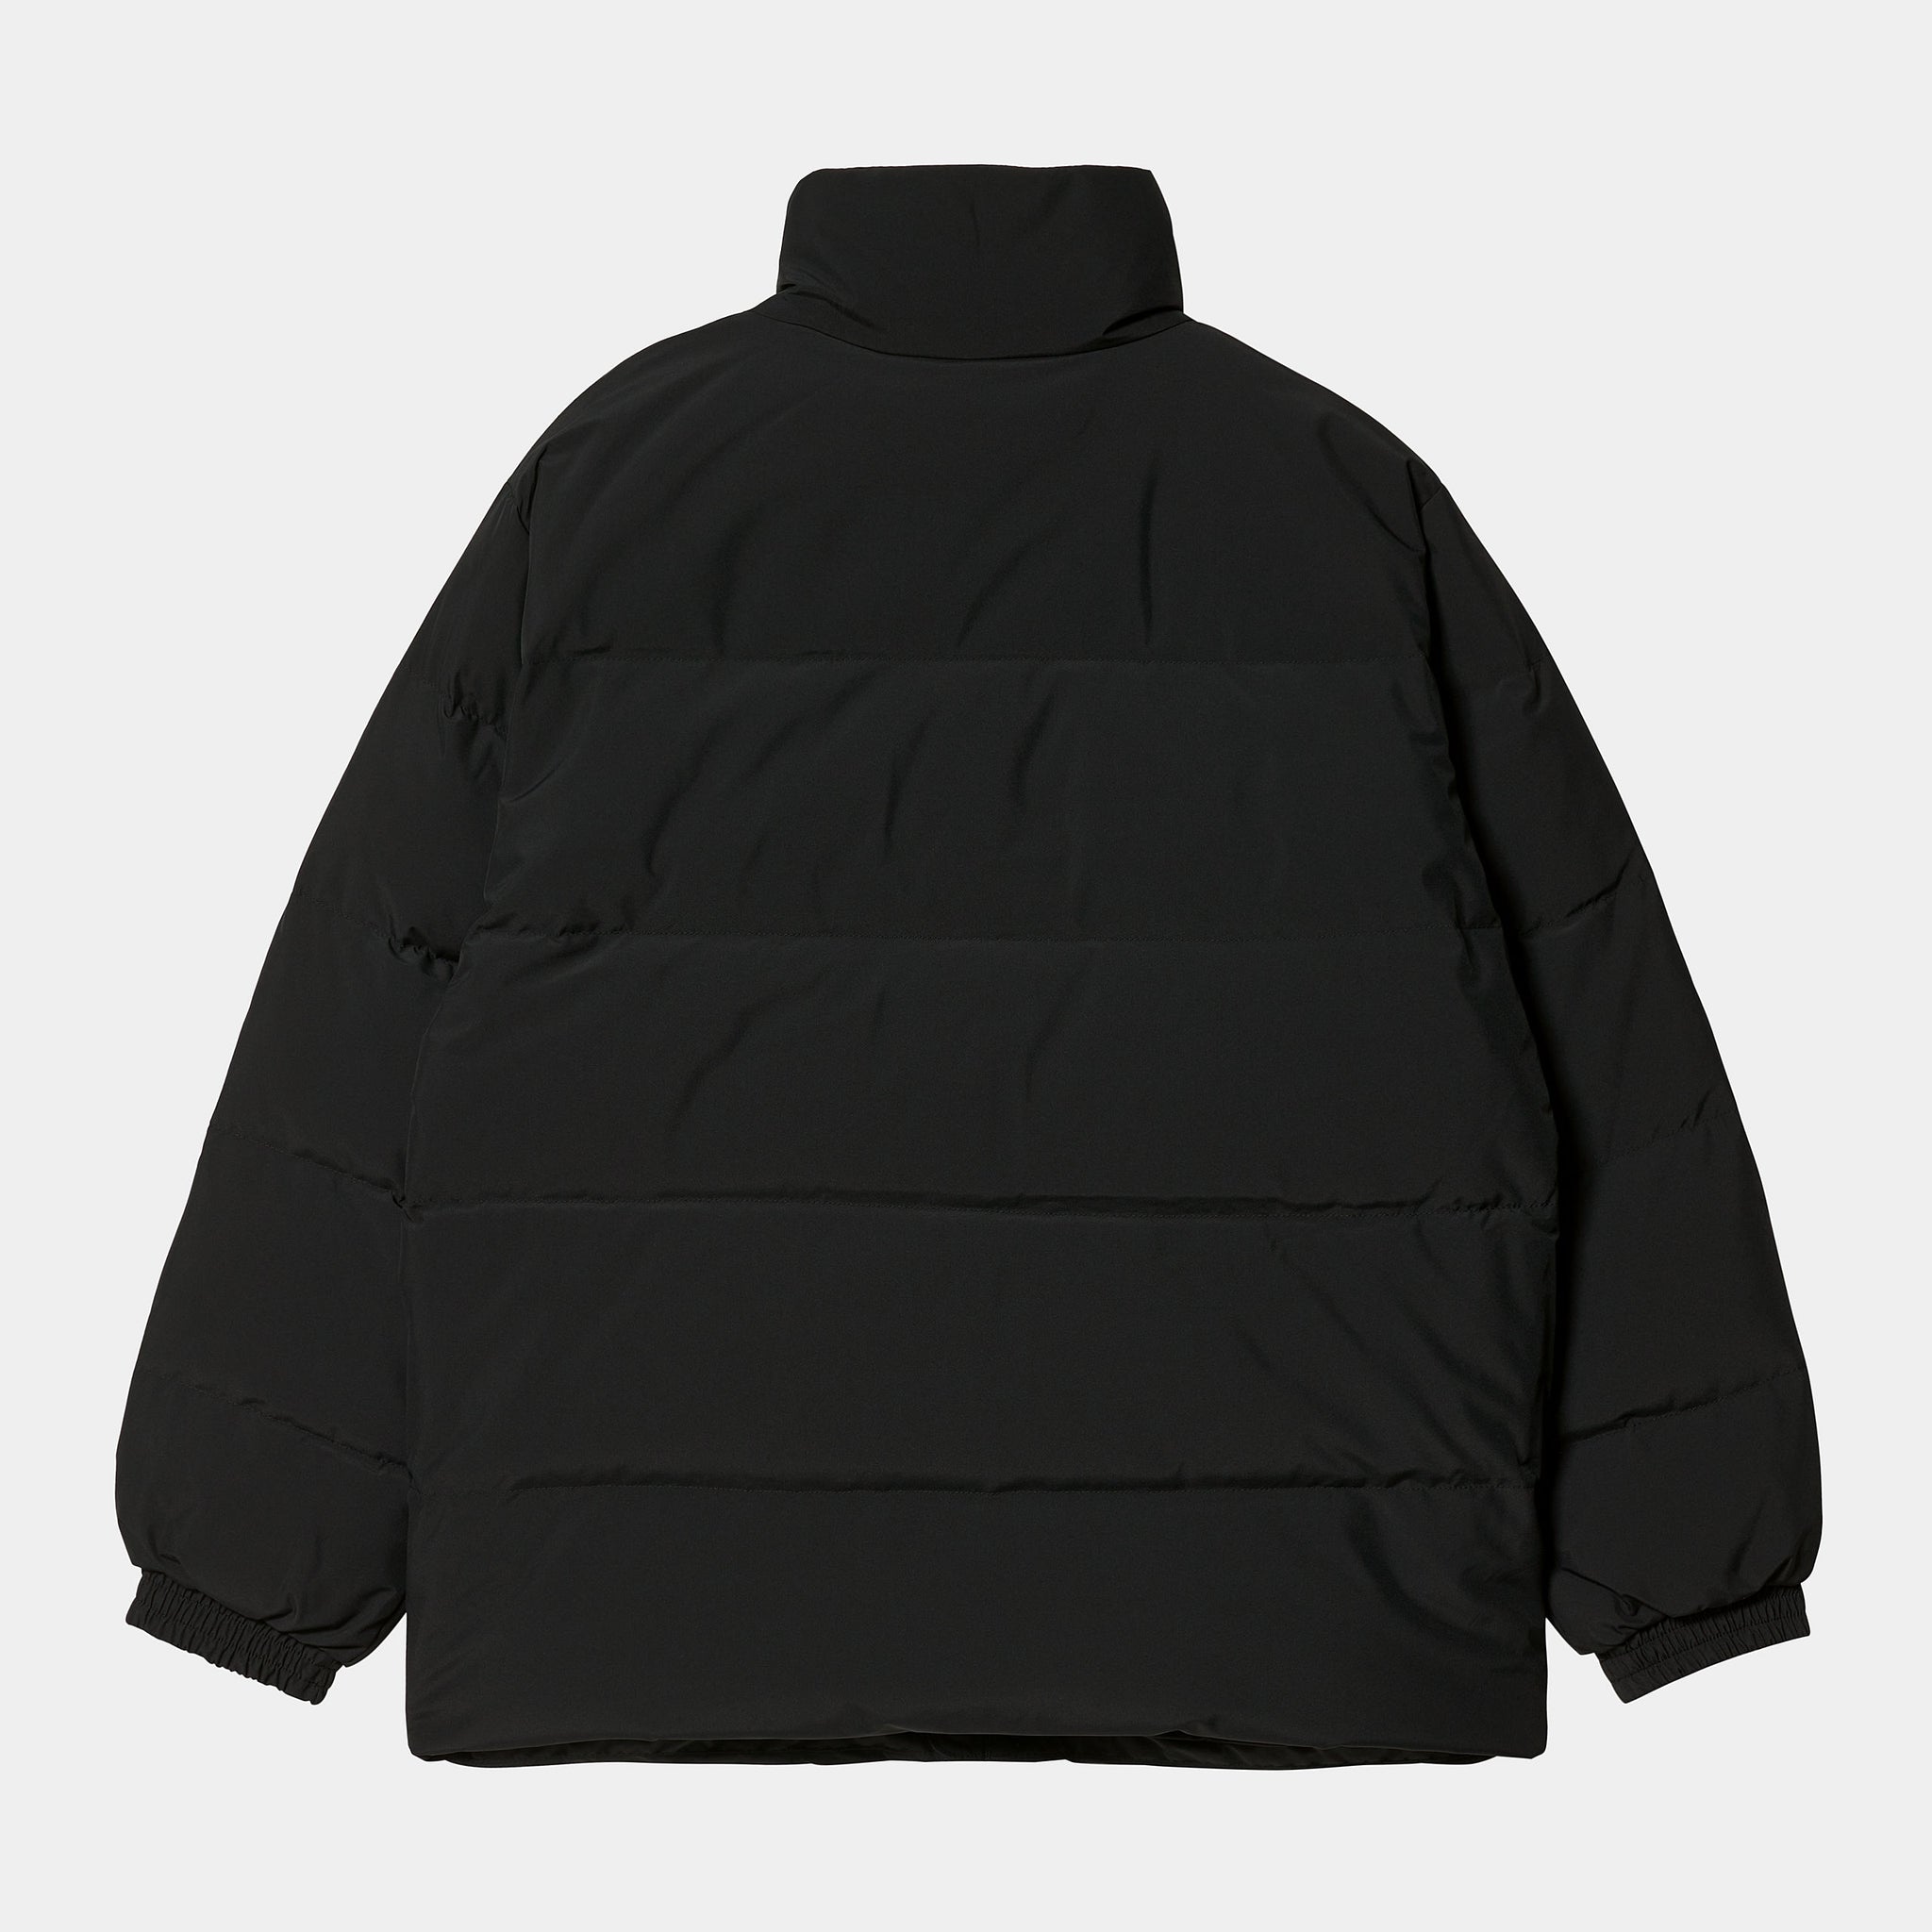 Carhartt WIP Danville Jacket (Black / White)